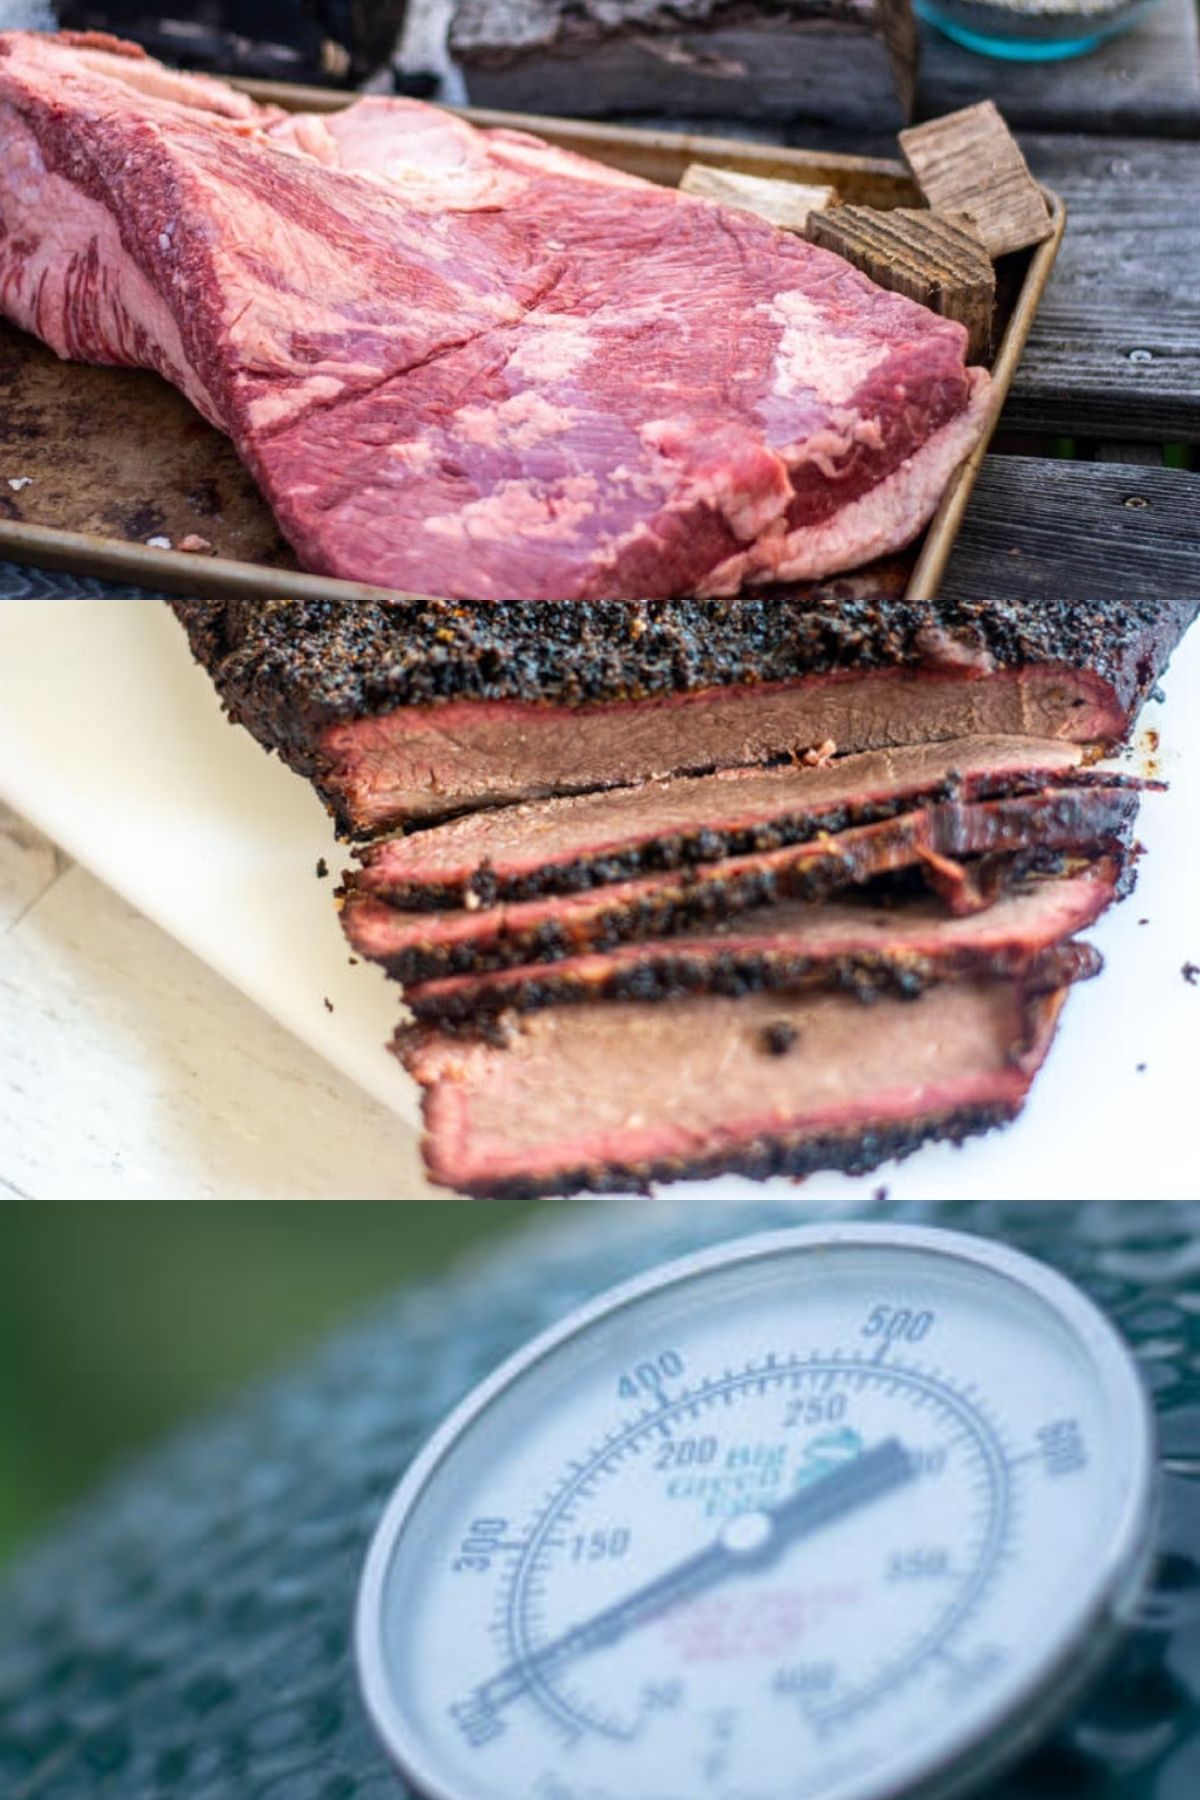 Photos of raw whole brisket, smoked sliced brisket, and smoker temperature gauge.